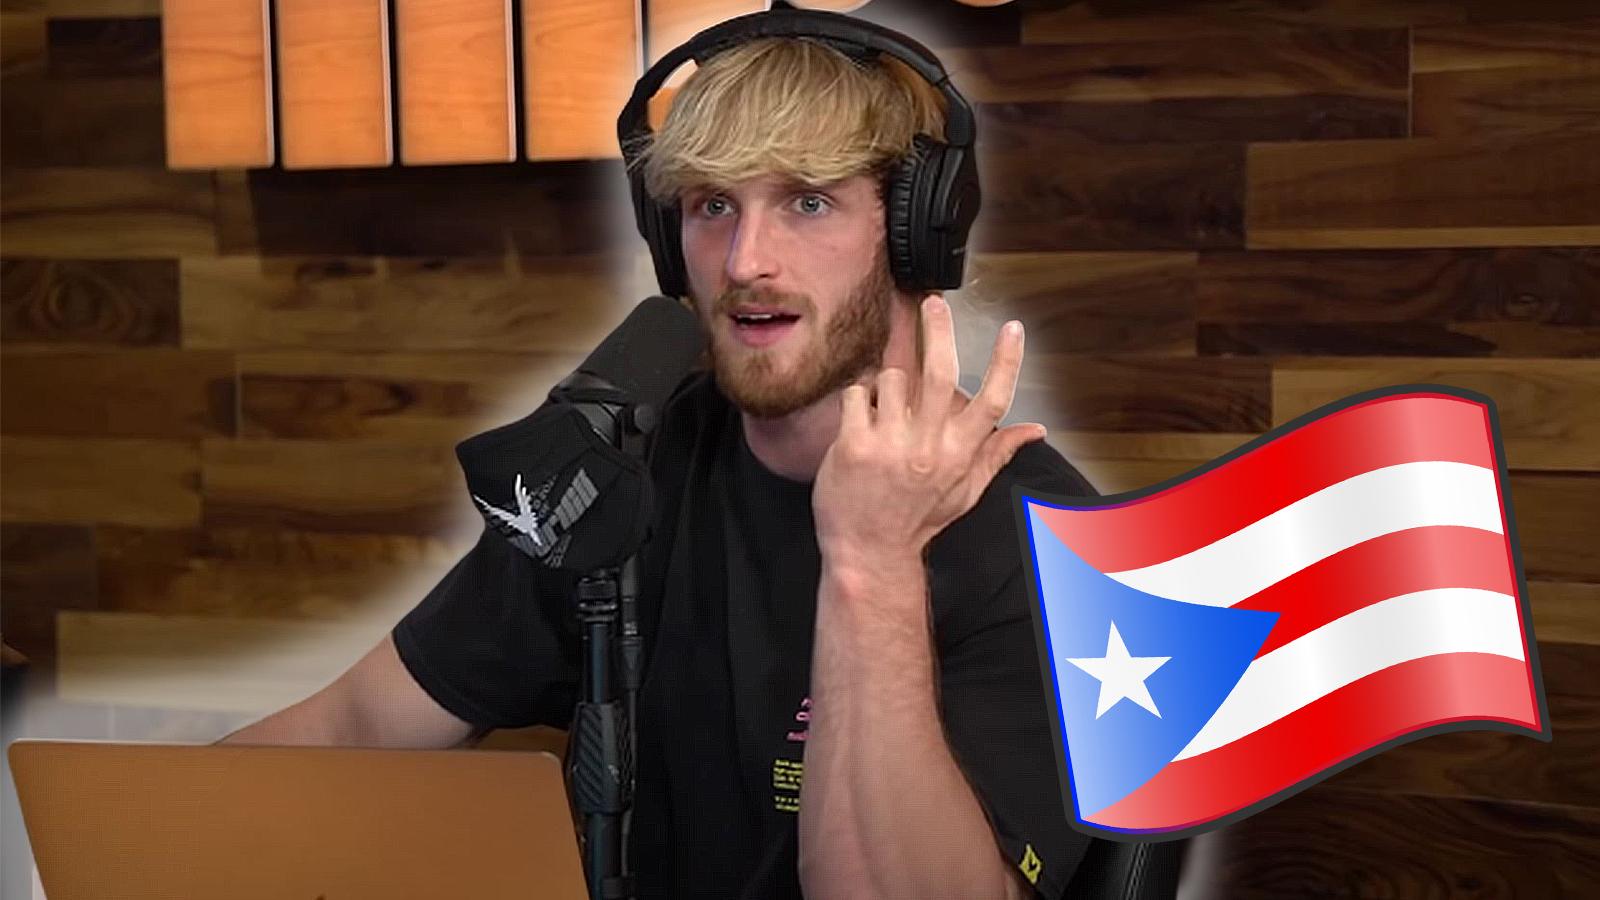 Logan Paul Puerto Rico move backlash taxes